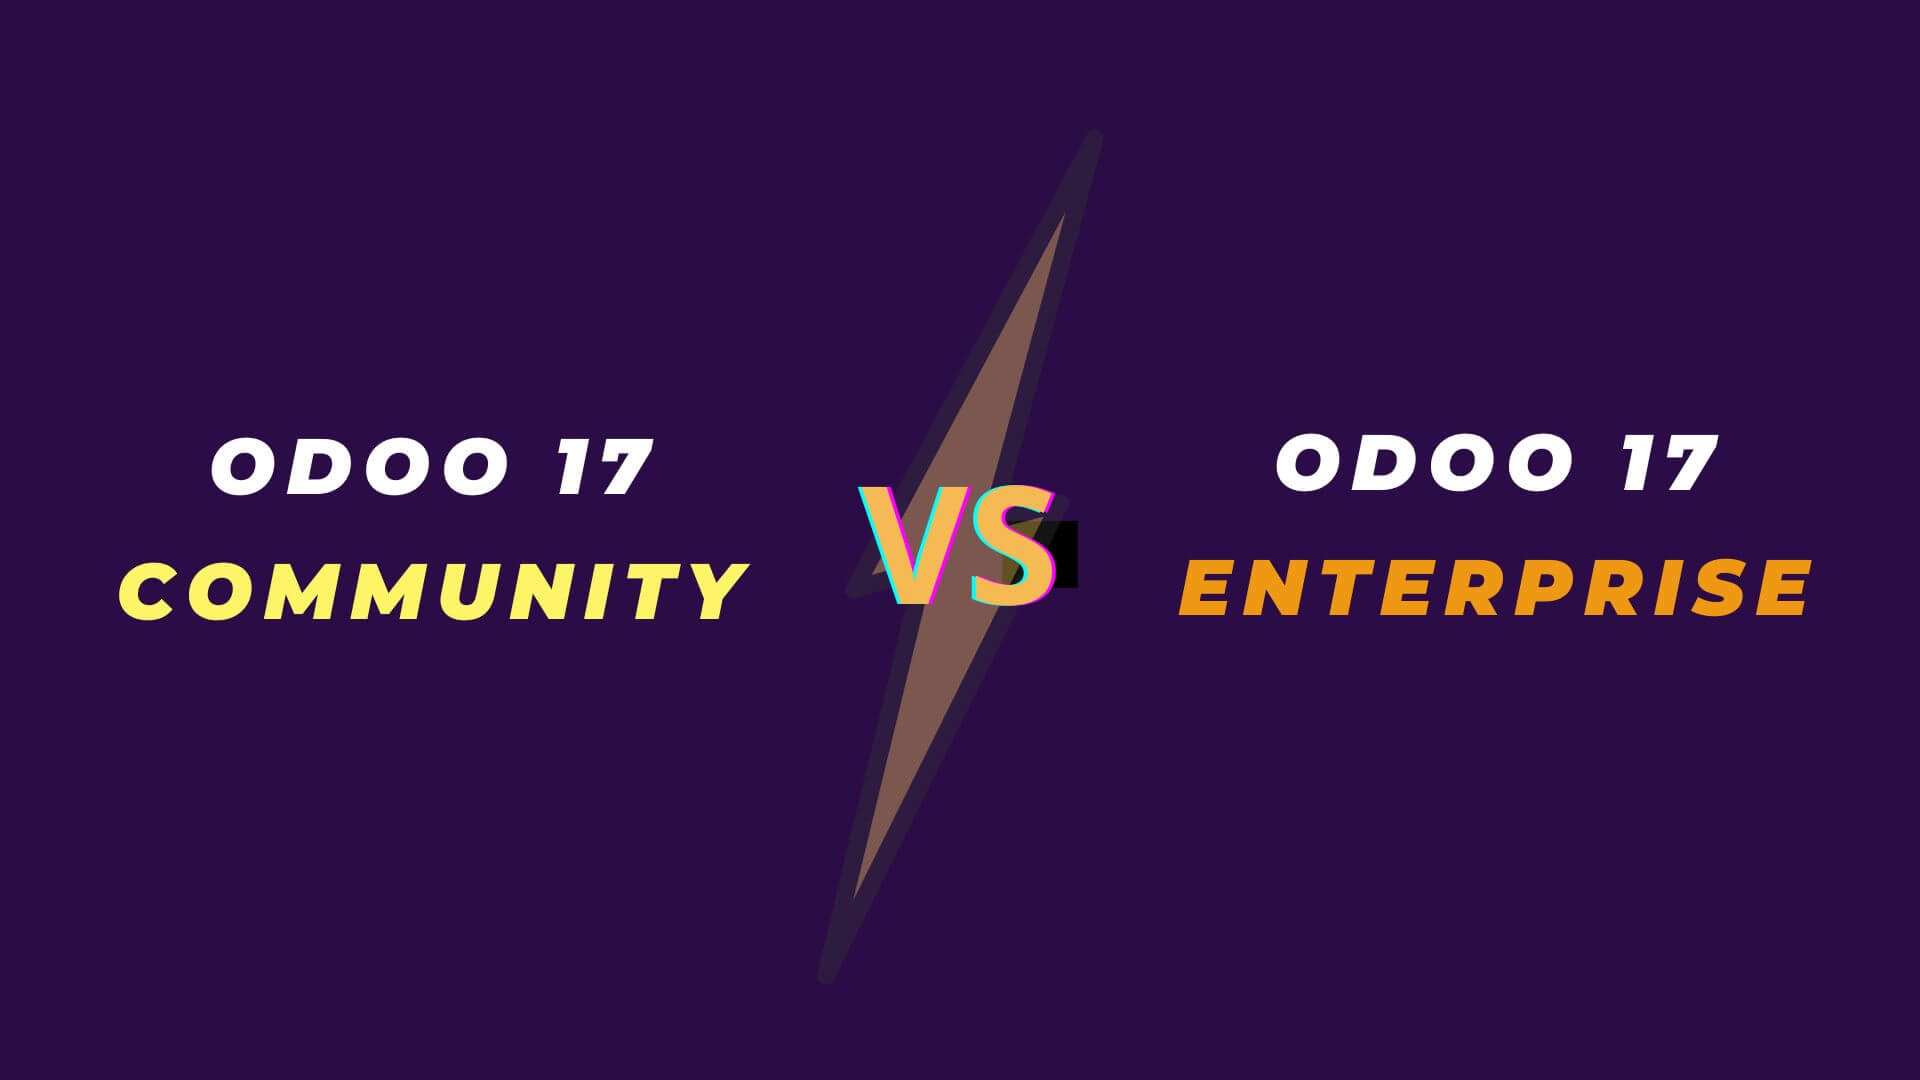 Community vs Enterprise